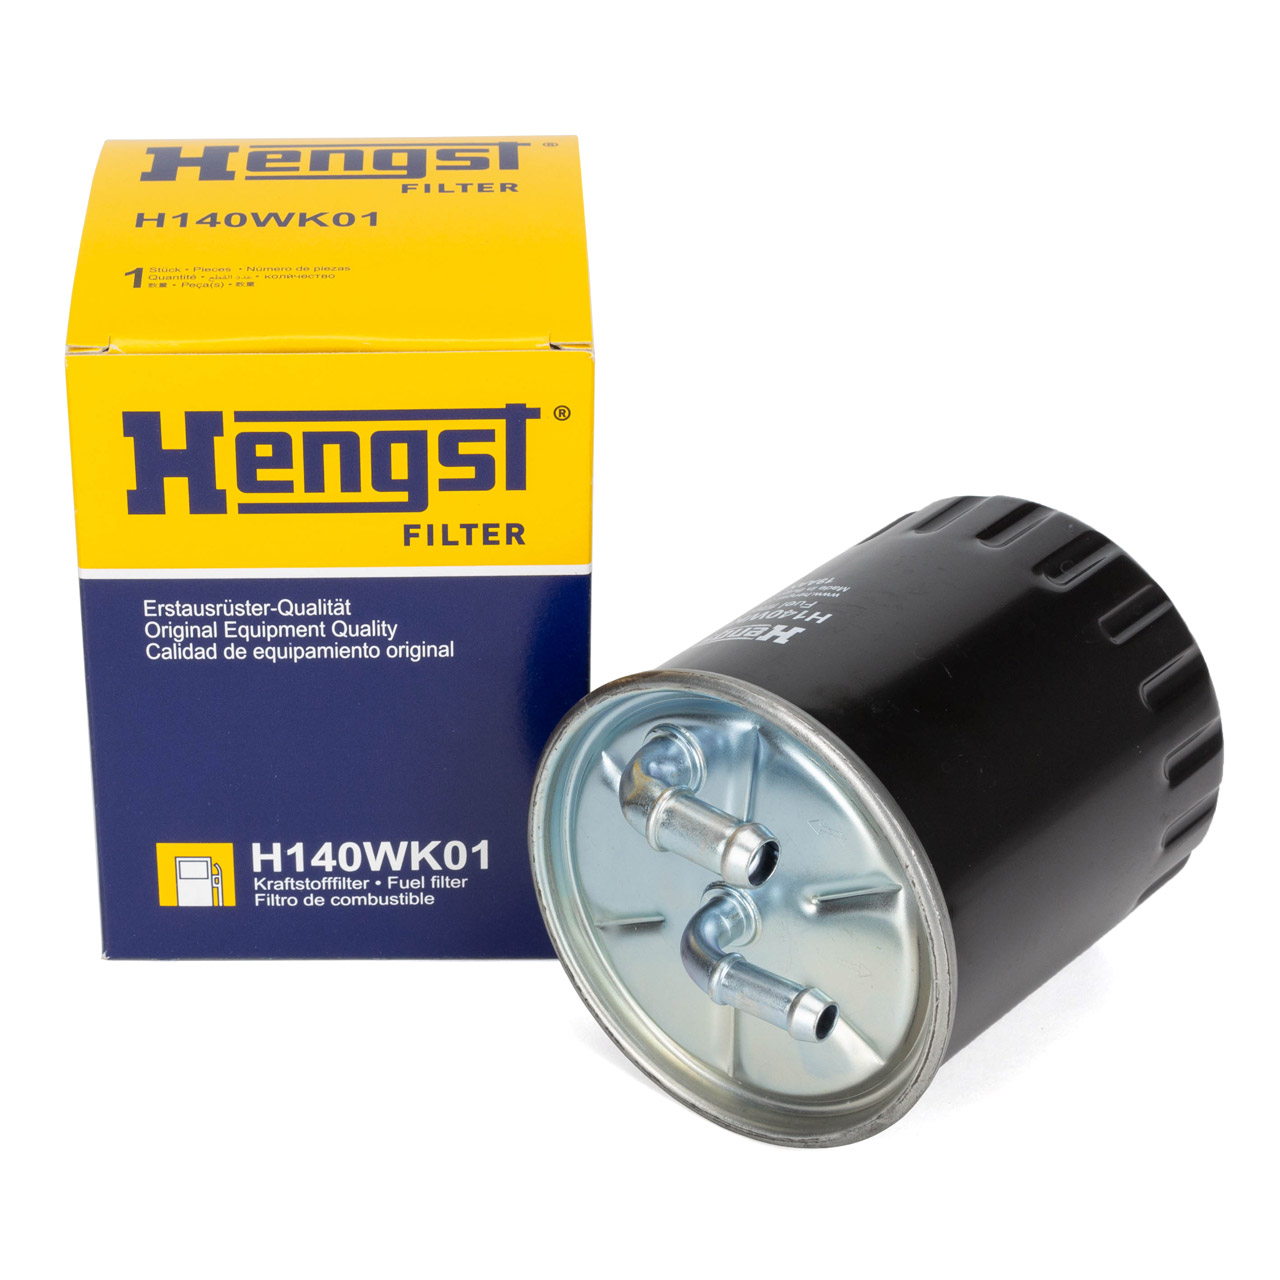 HENGST H140WK01 Kraftstofffilter MERCEDES OM611/612/640/629/642/646/647/648